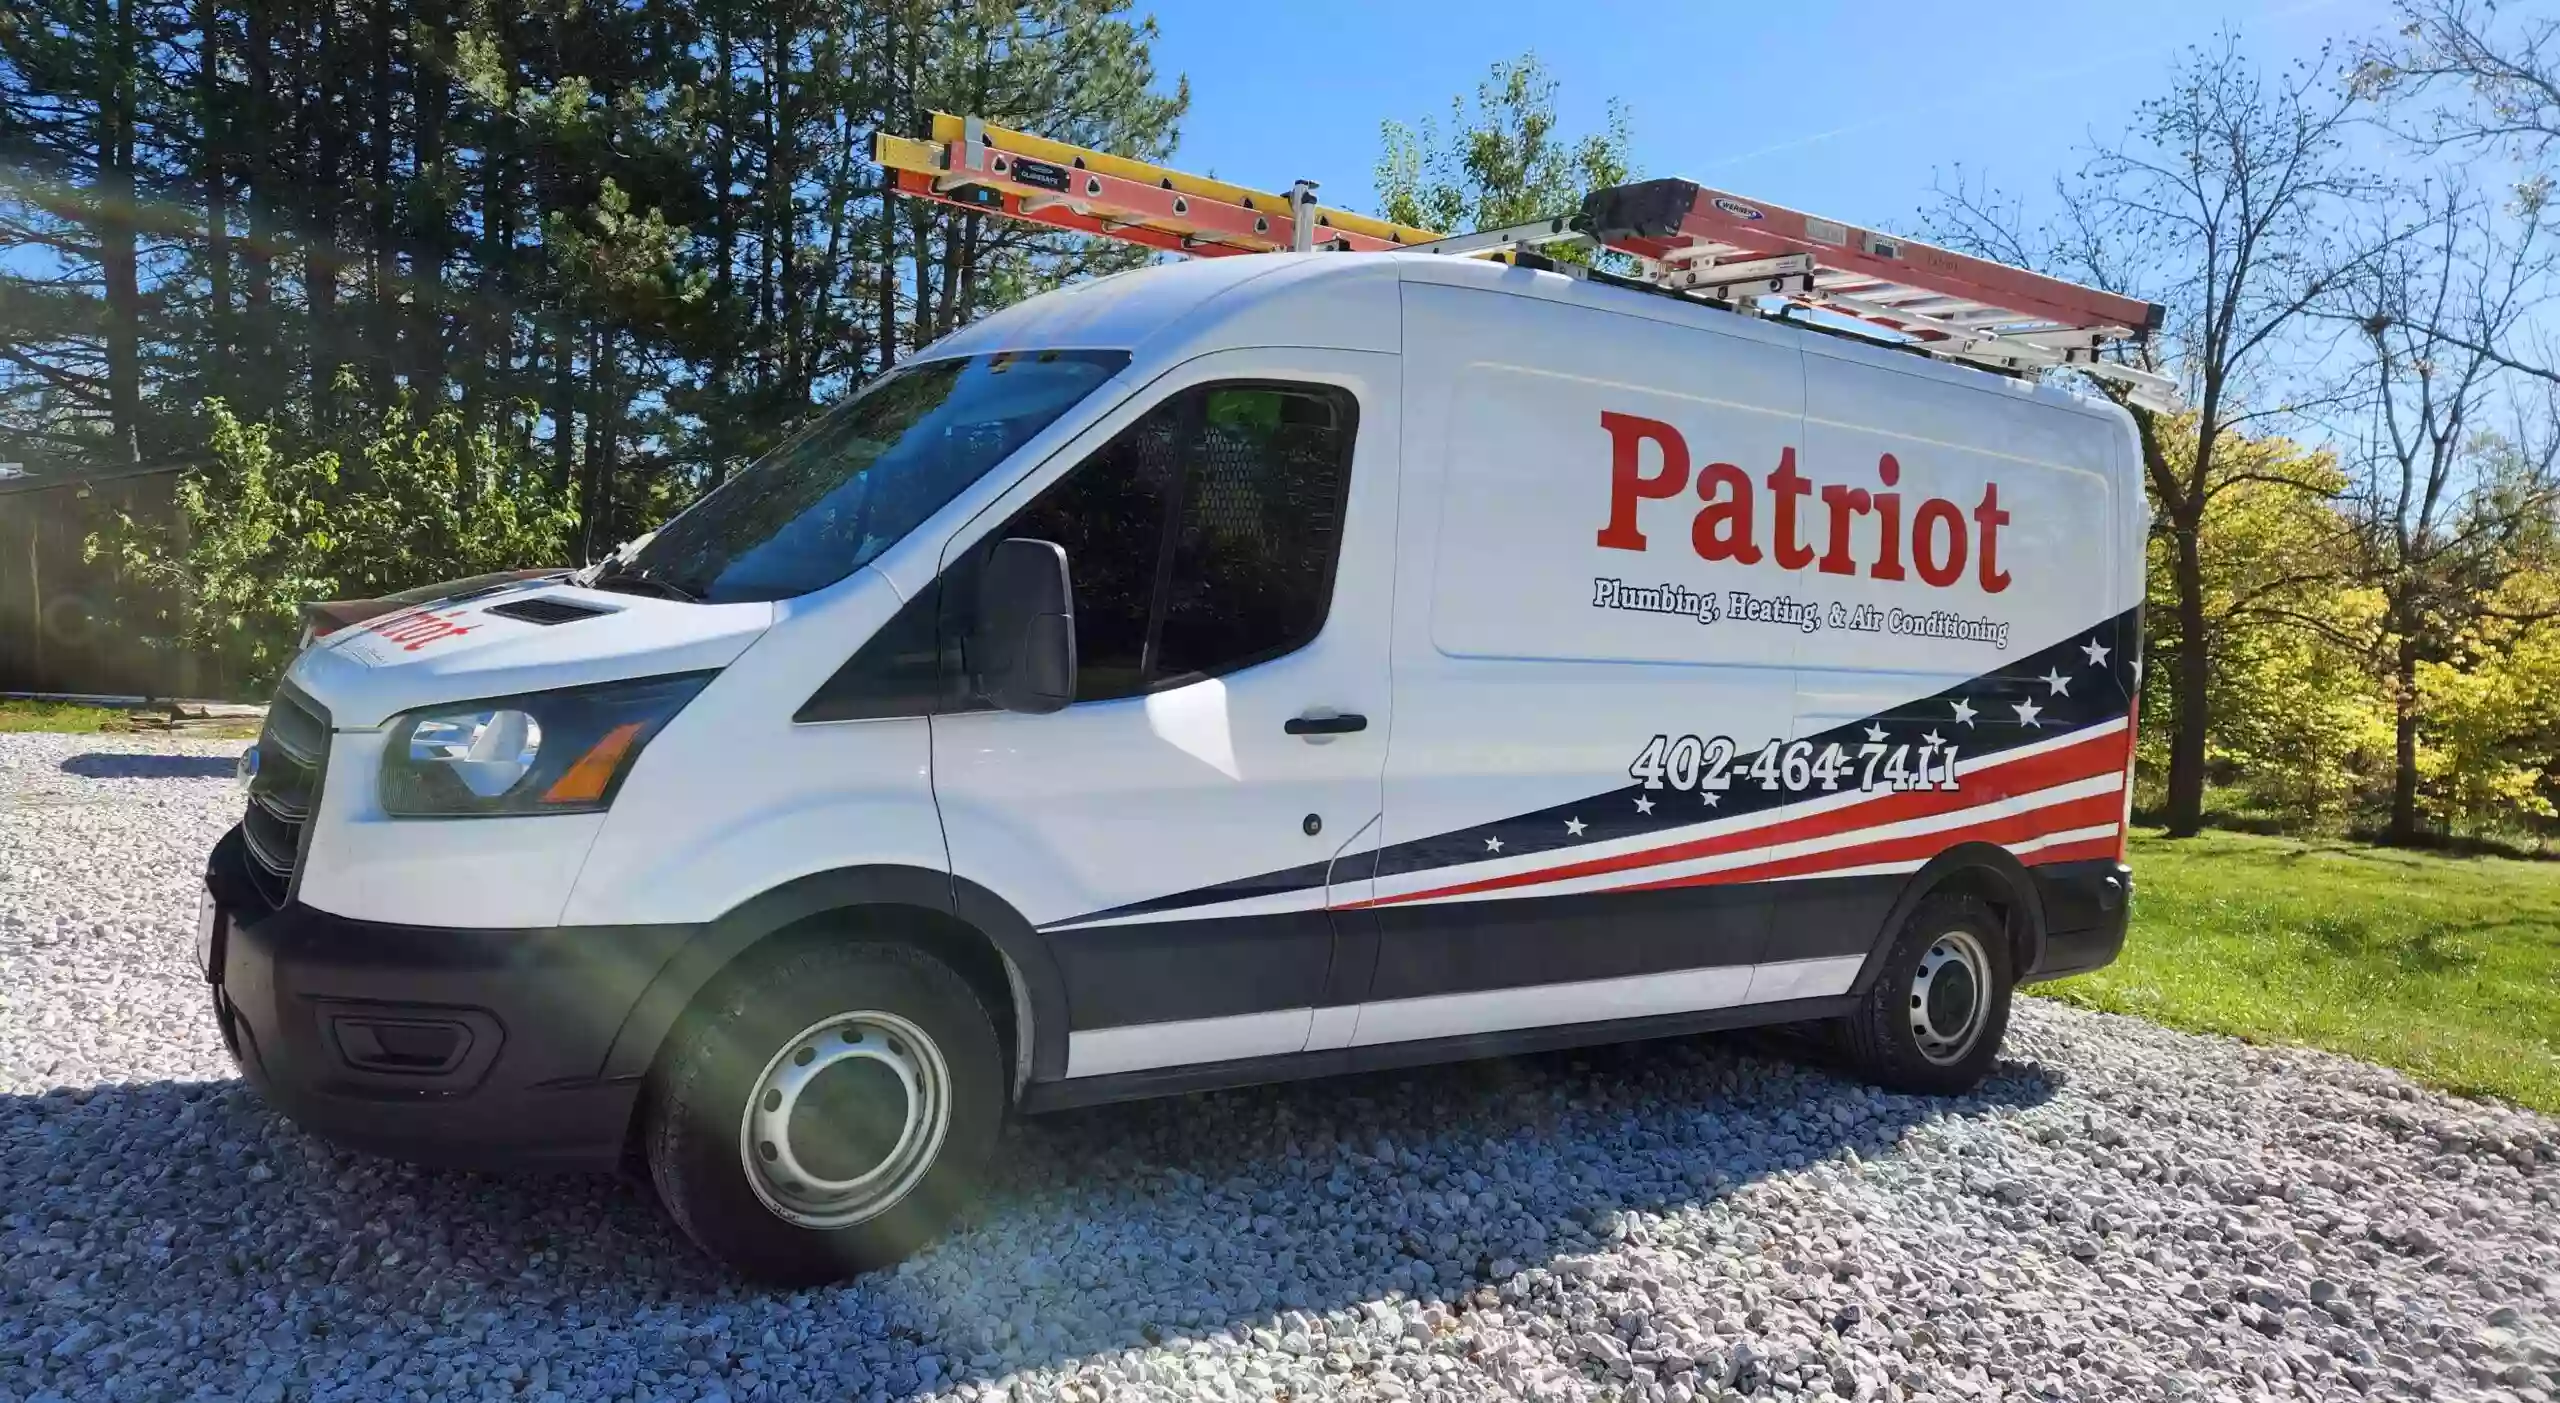 Patriot Plumbing, Heating & AC